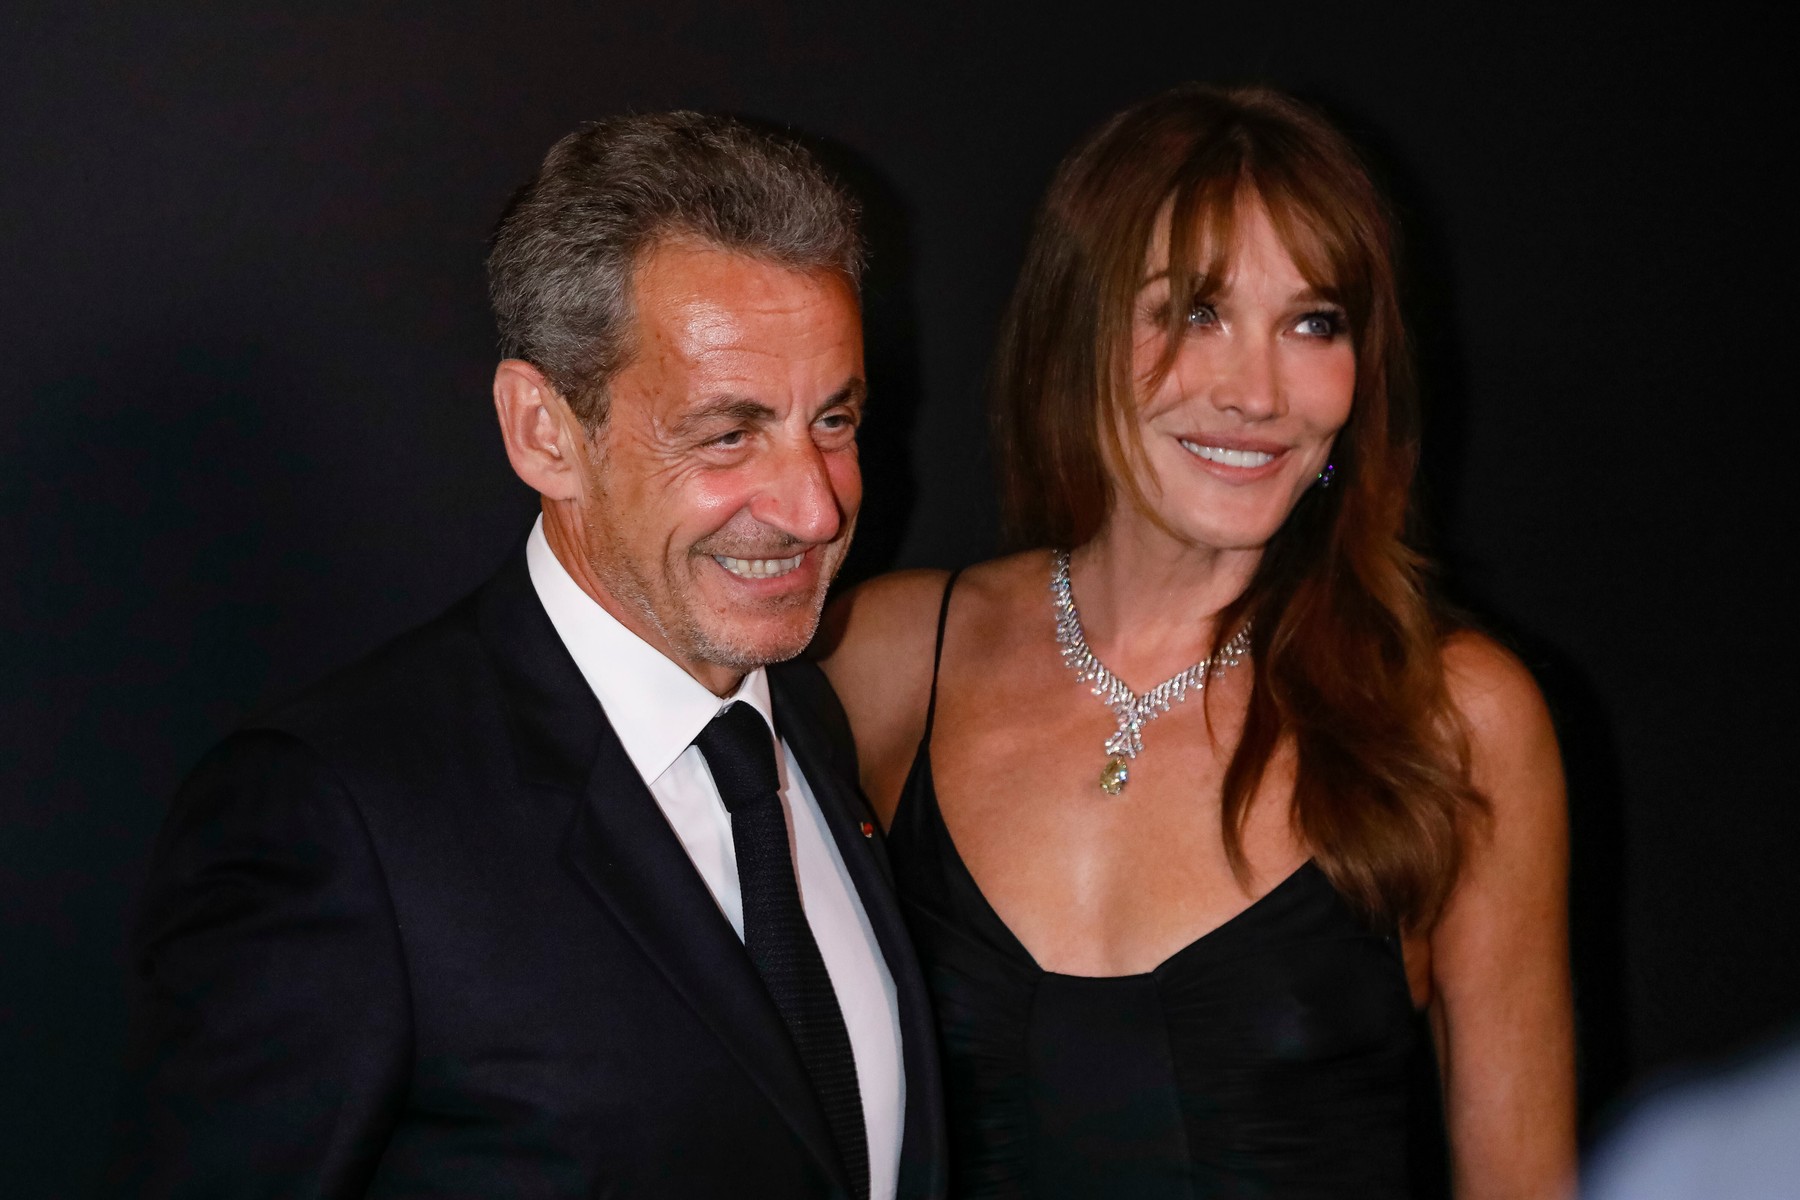 Nicoas Sarkozy, Carla Bruni